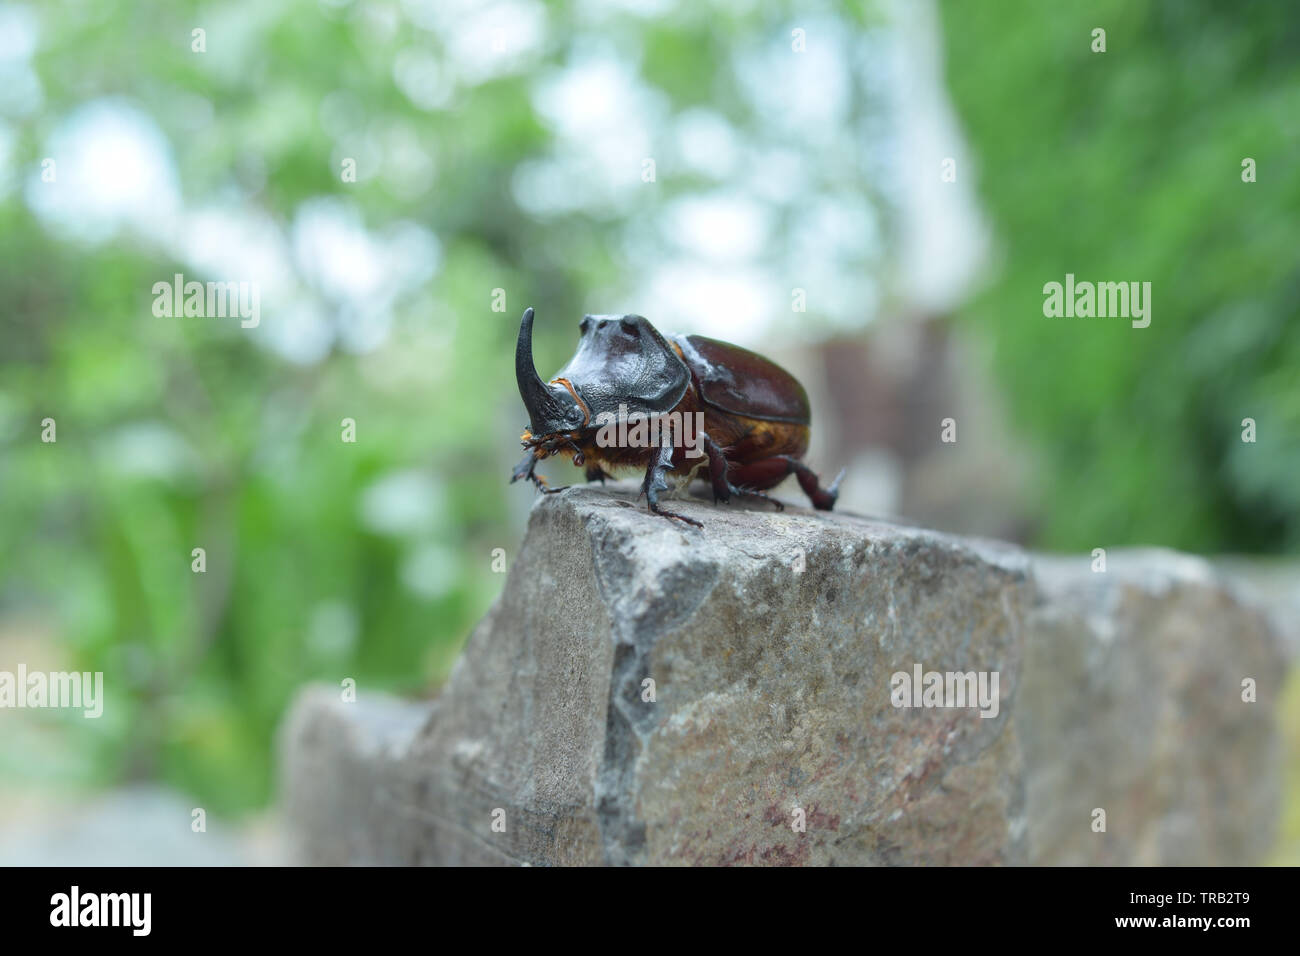 rhinoceros beetle close up on a stone Stock Photo